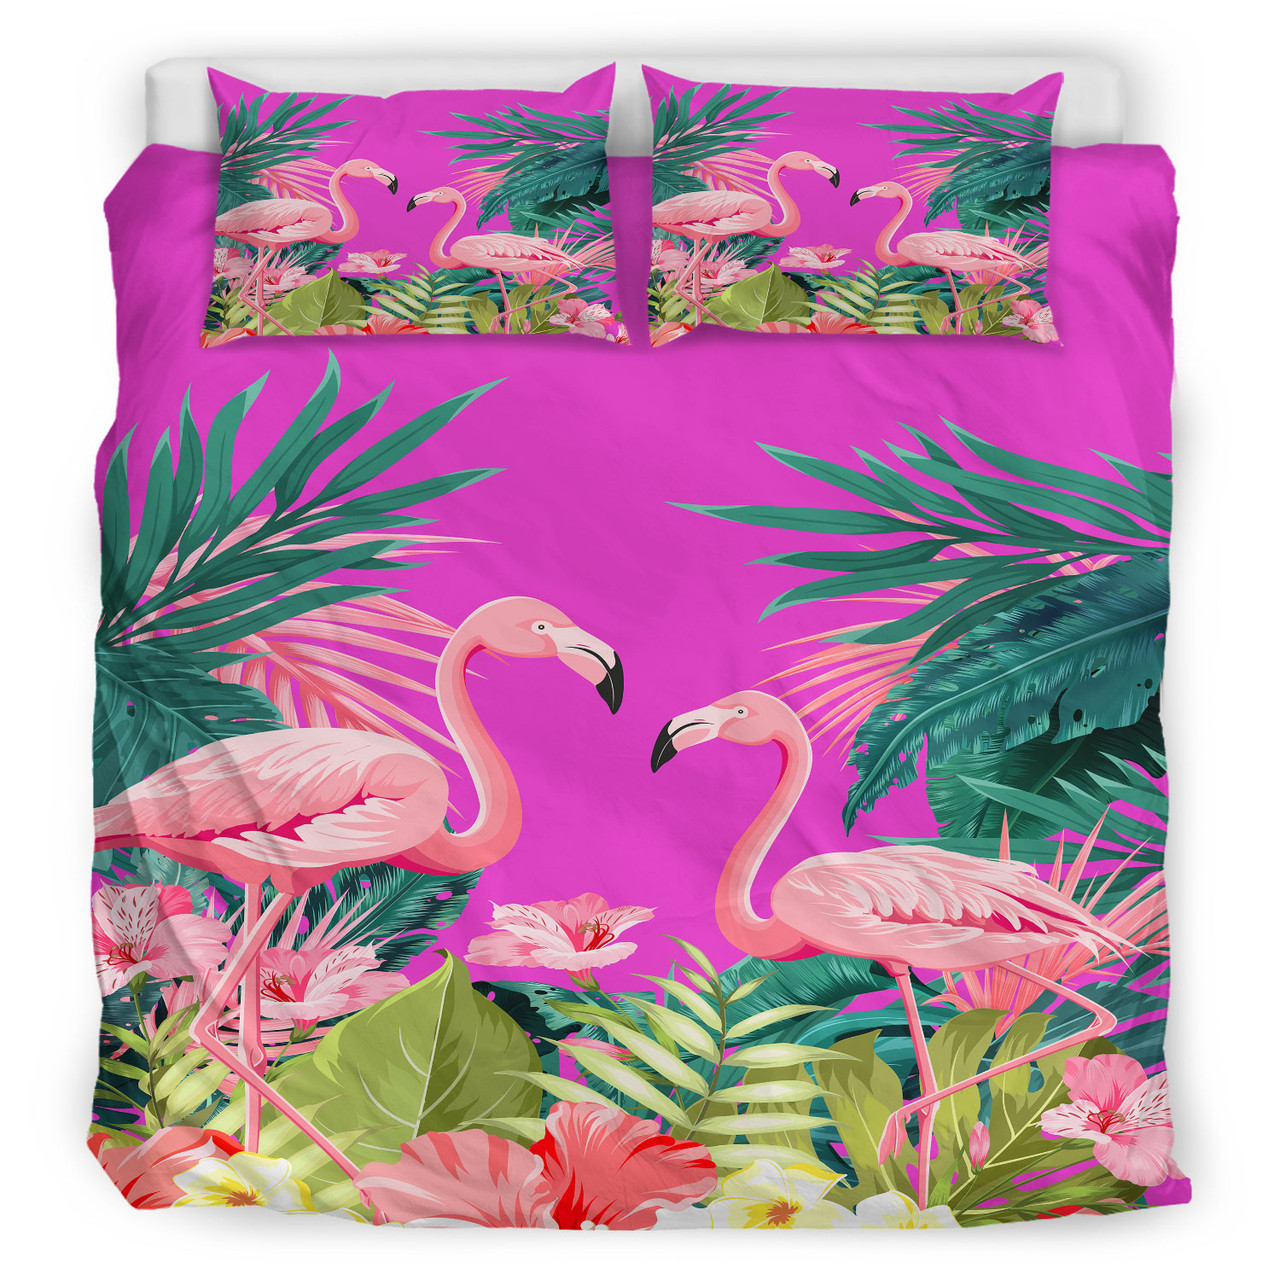 Polynesian Bedding Set - Flamingo Love Sumer Vibes Tropical Pinky Bedding Set